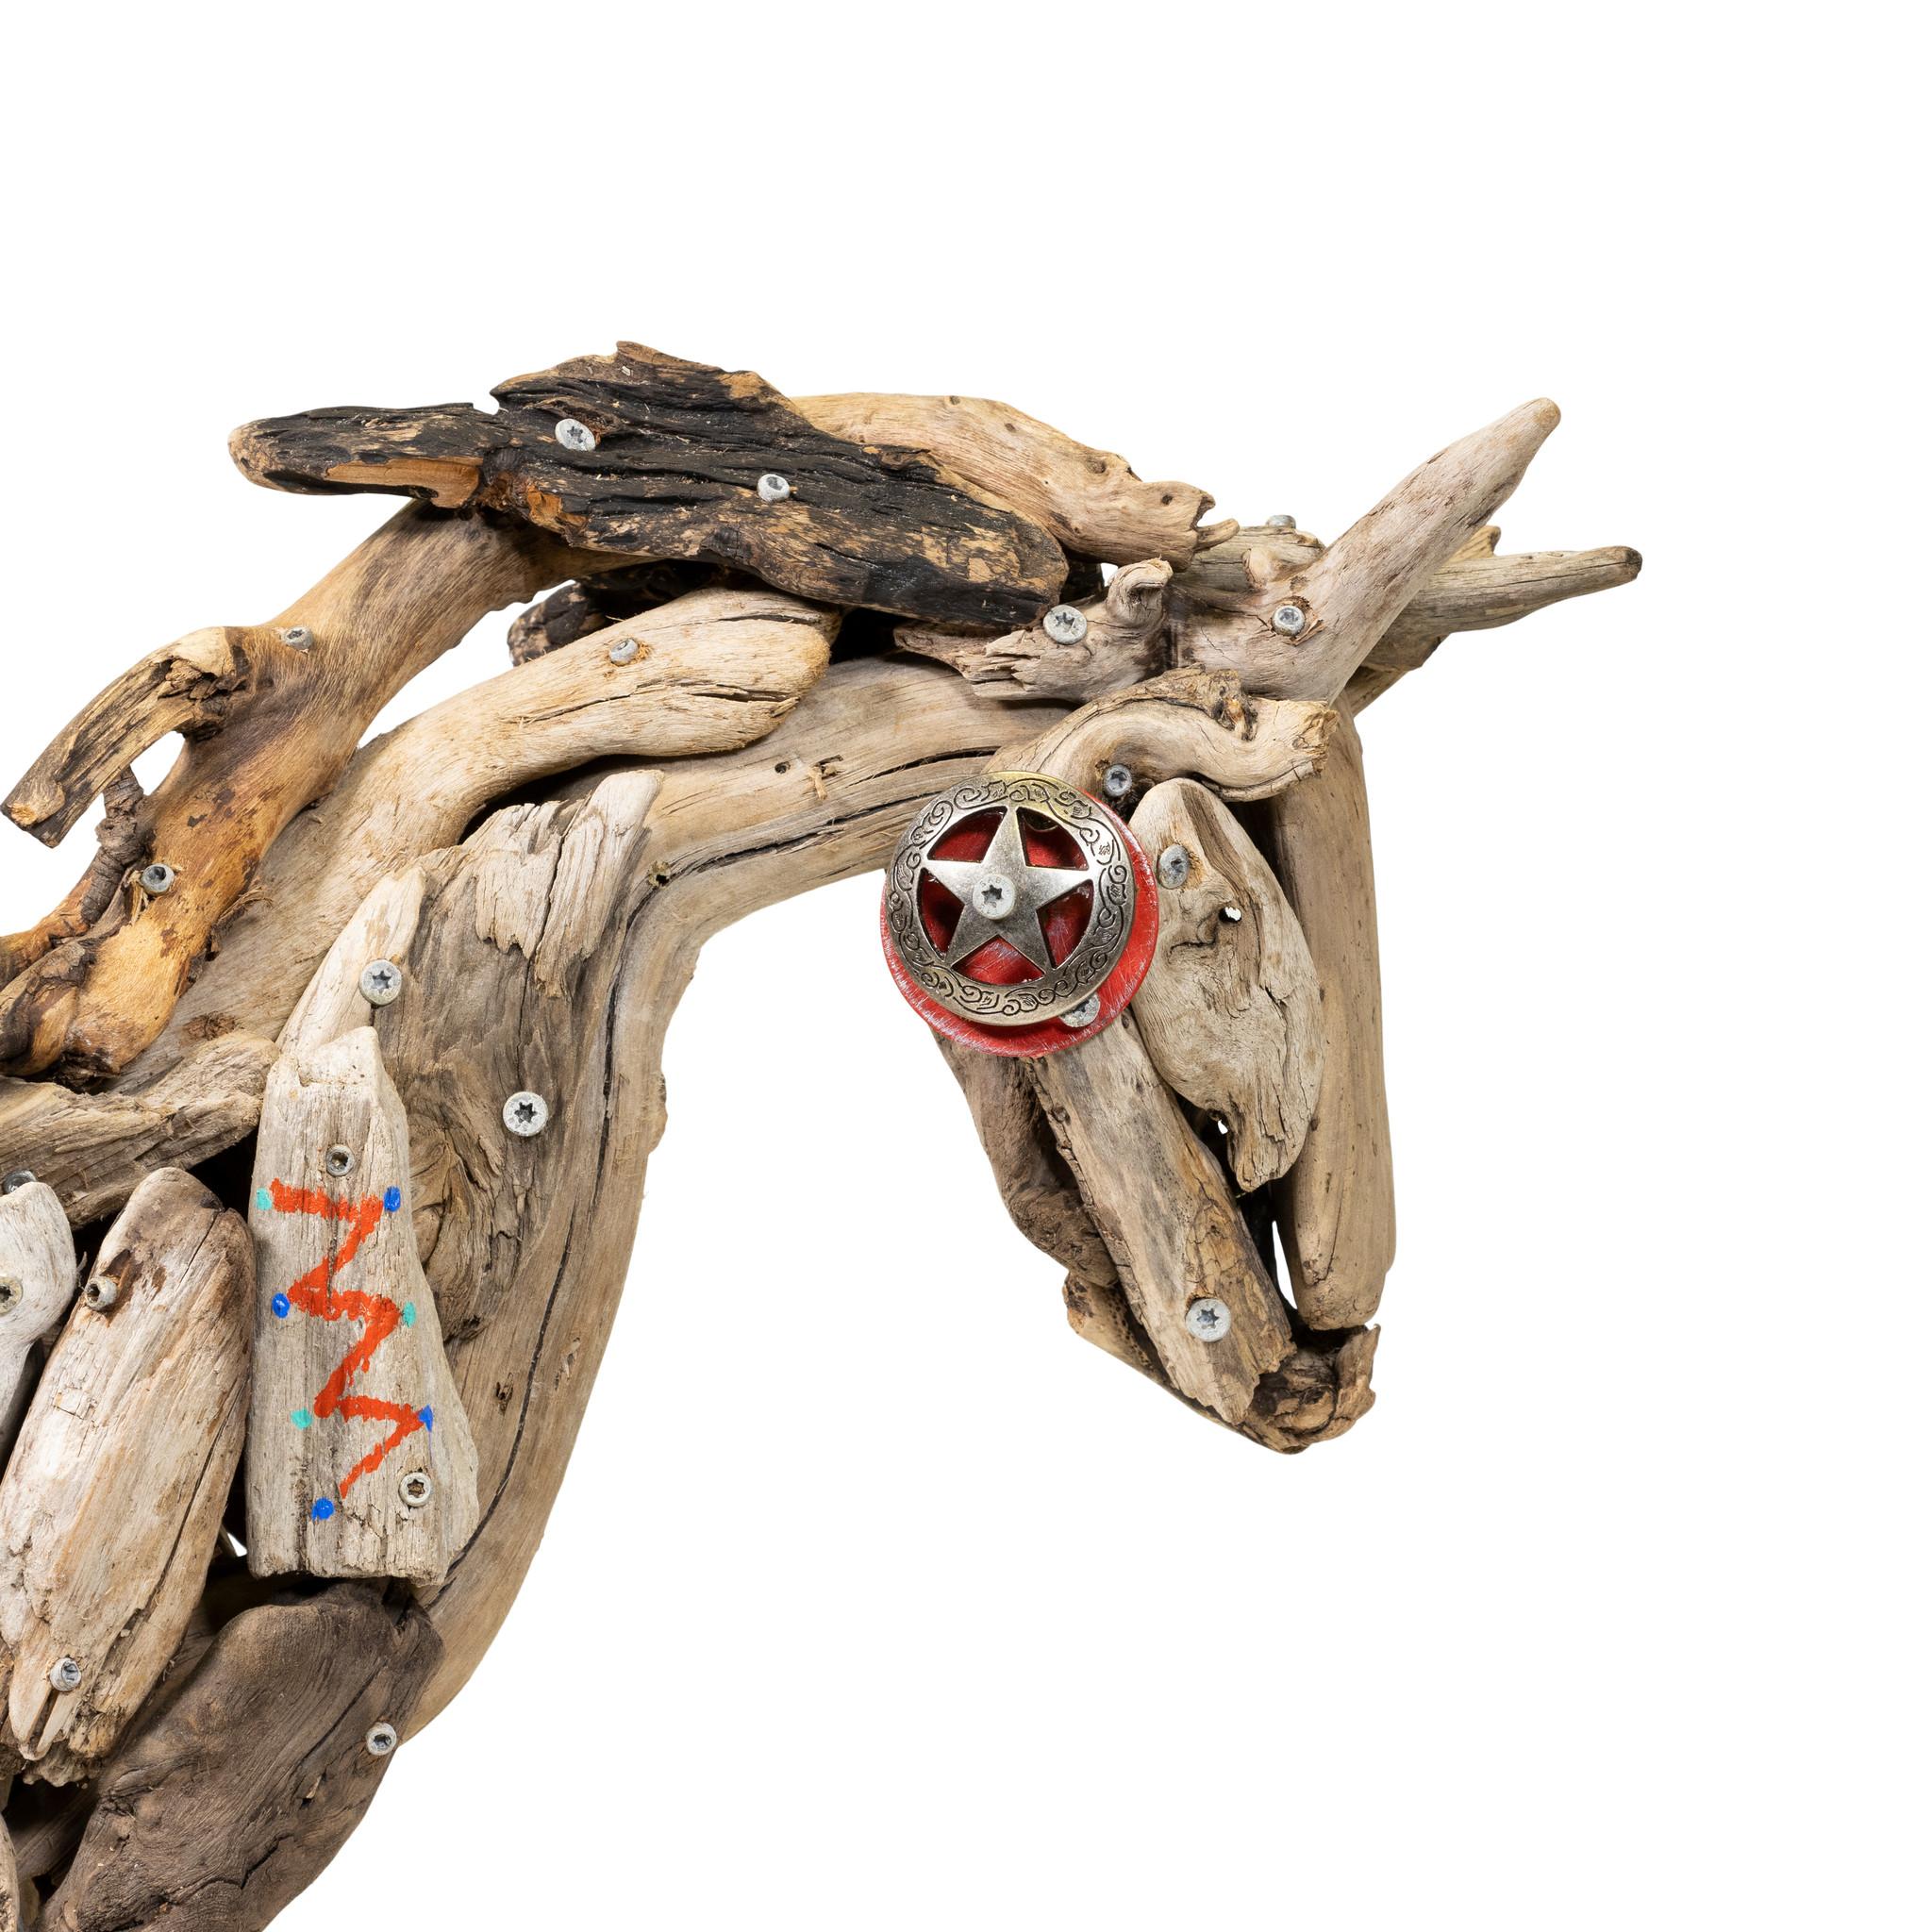 driftwood sculpture for sale